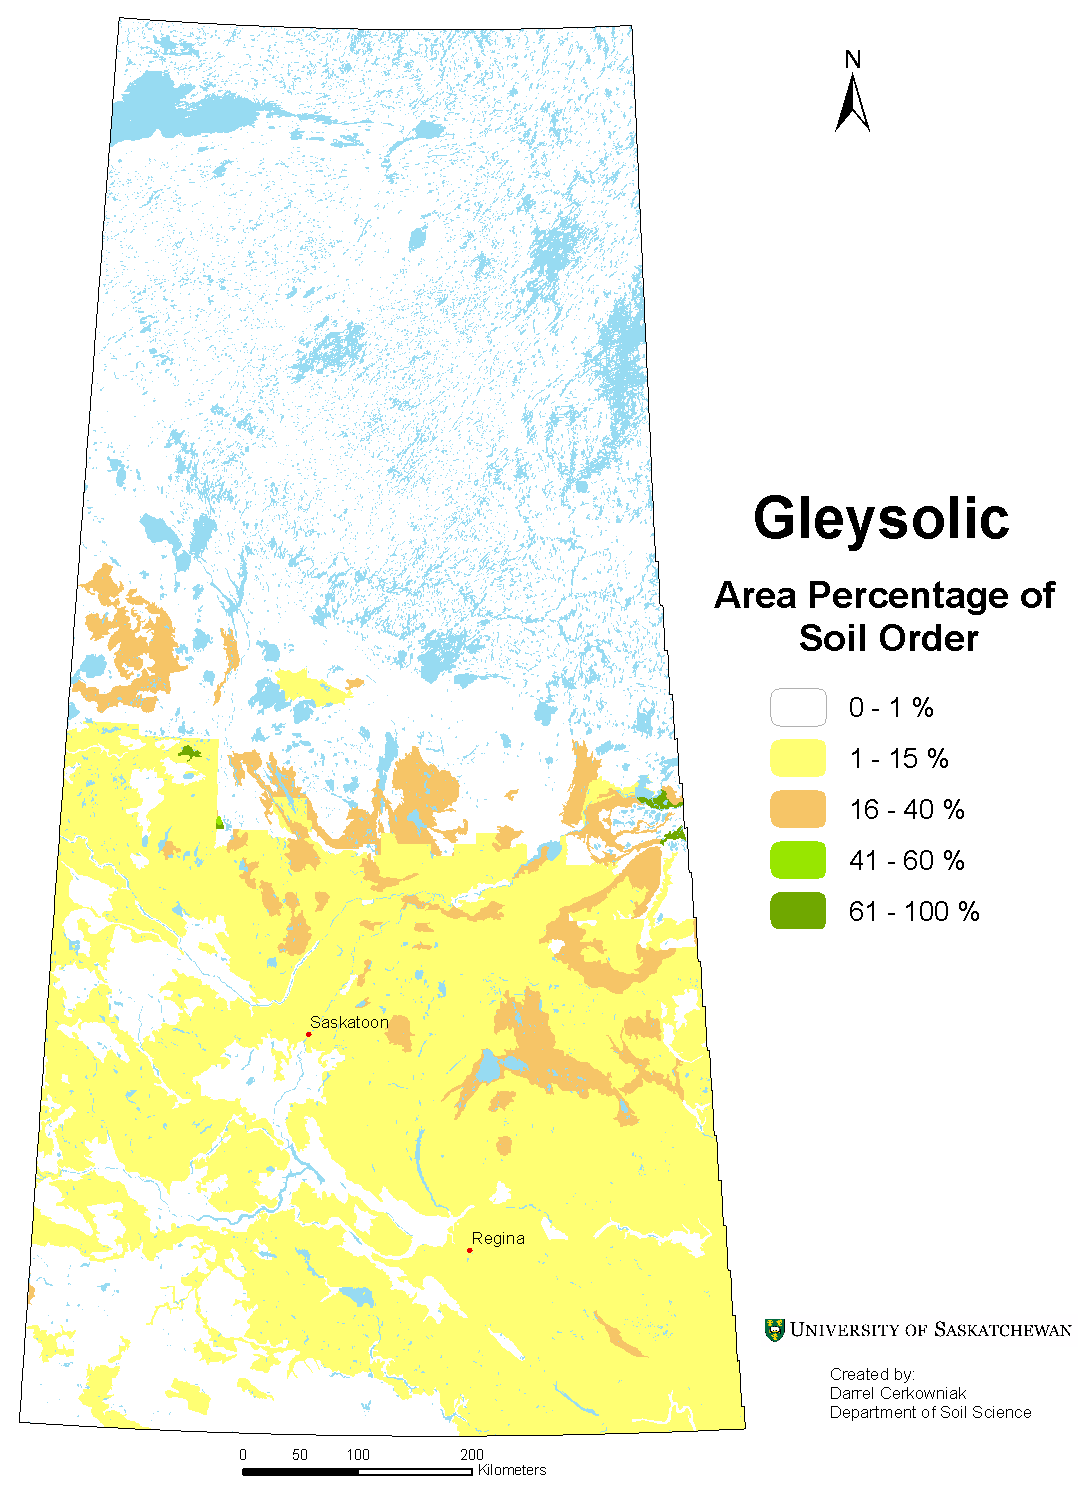 Distribution of Gleysolic soils in Saskatchewan